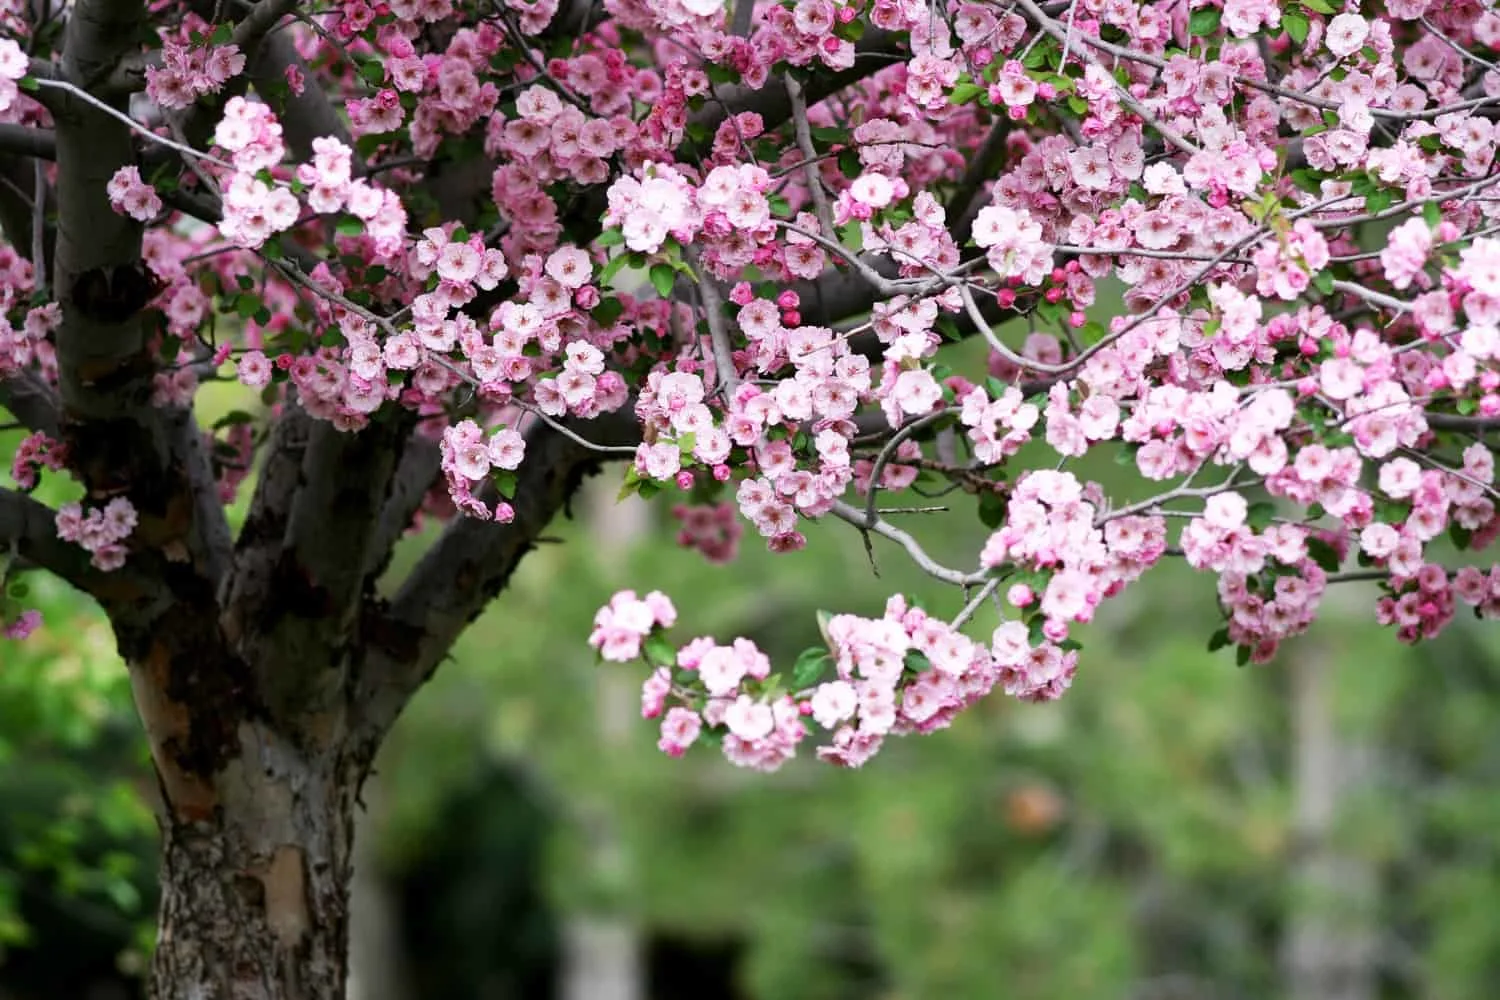 Brandywine crabapple tree in full bloom. 